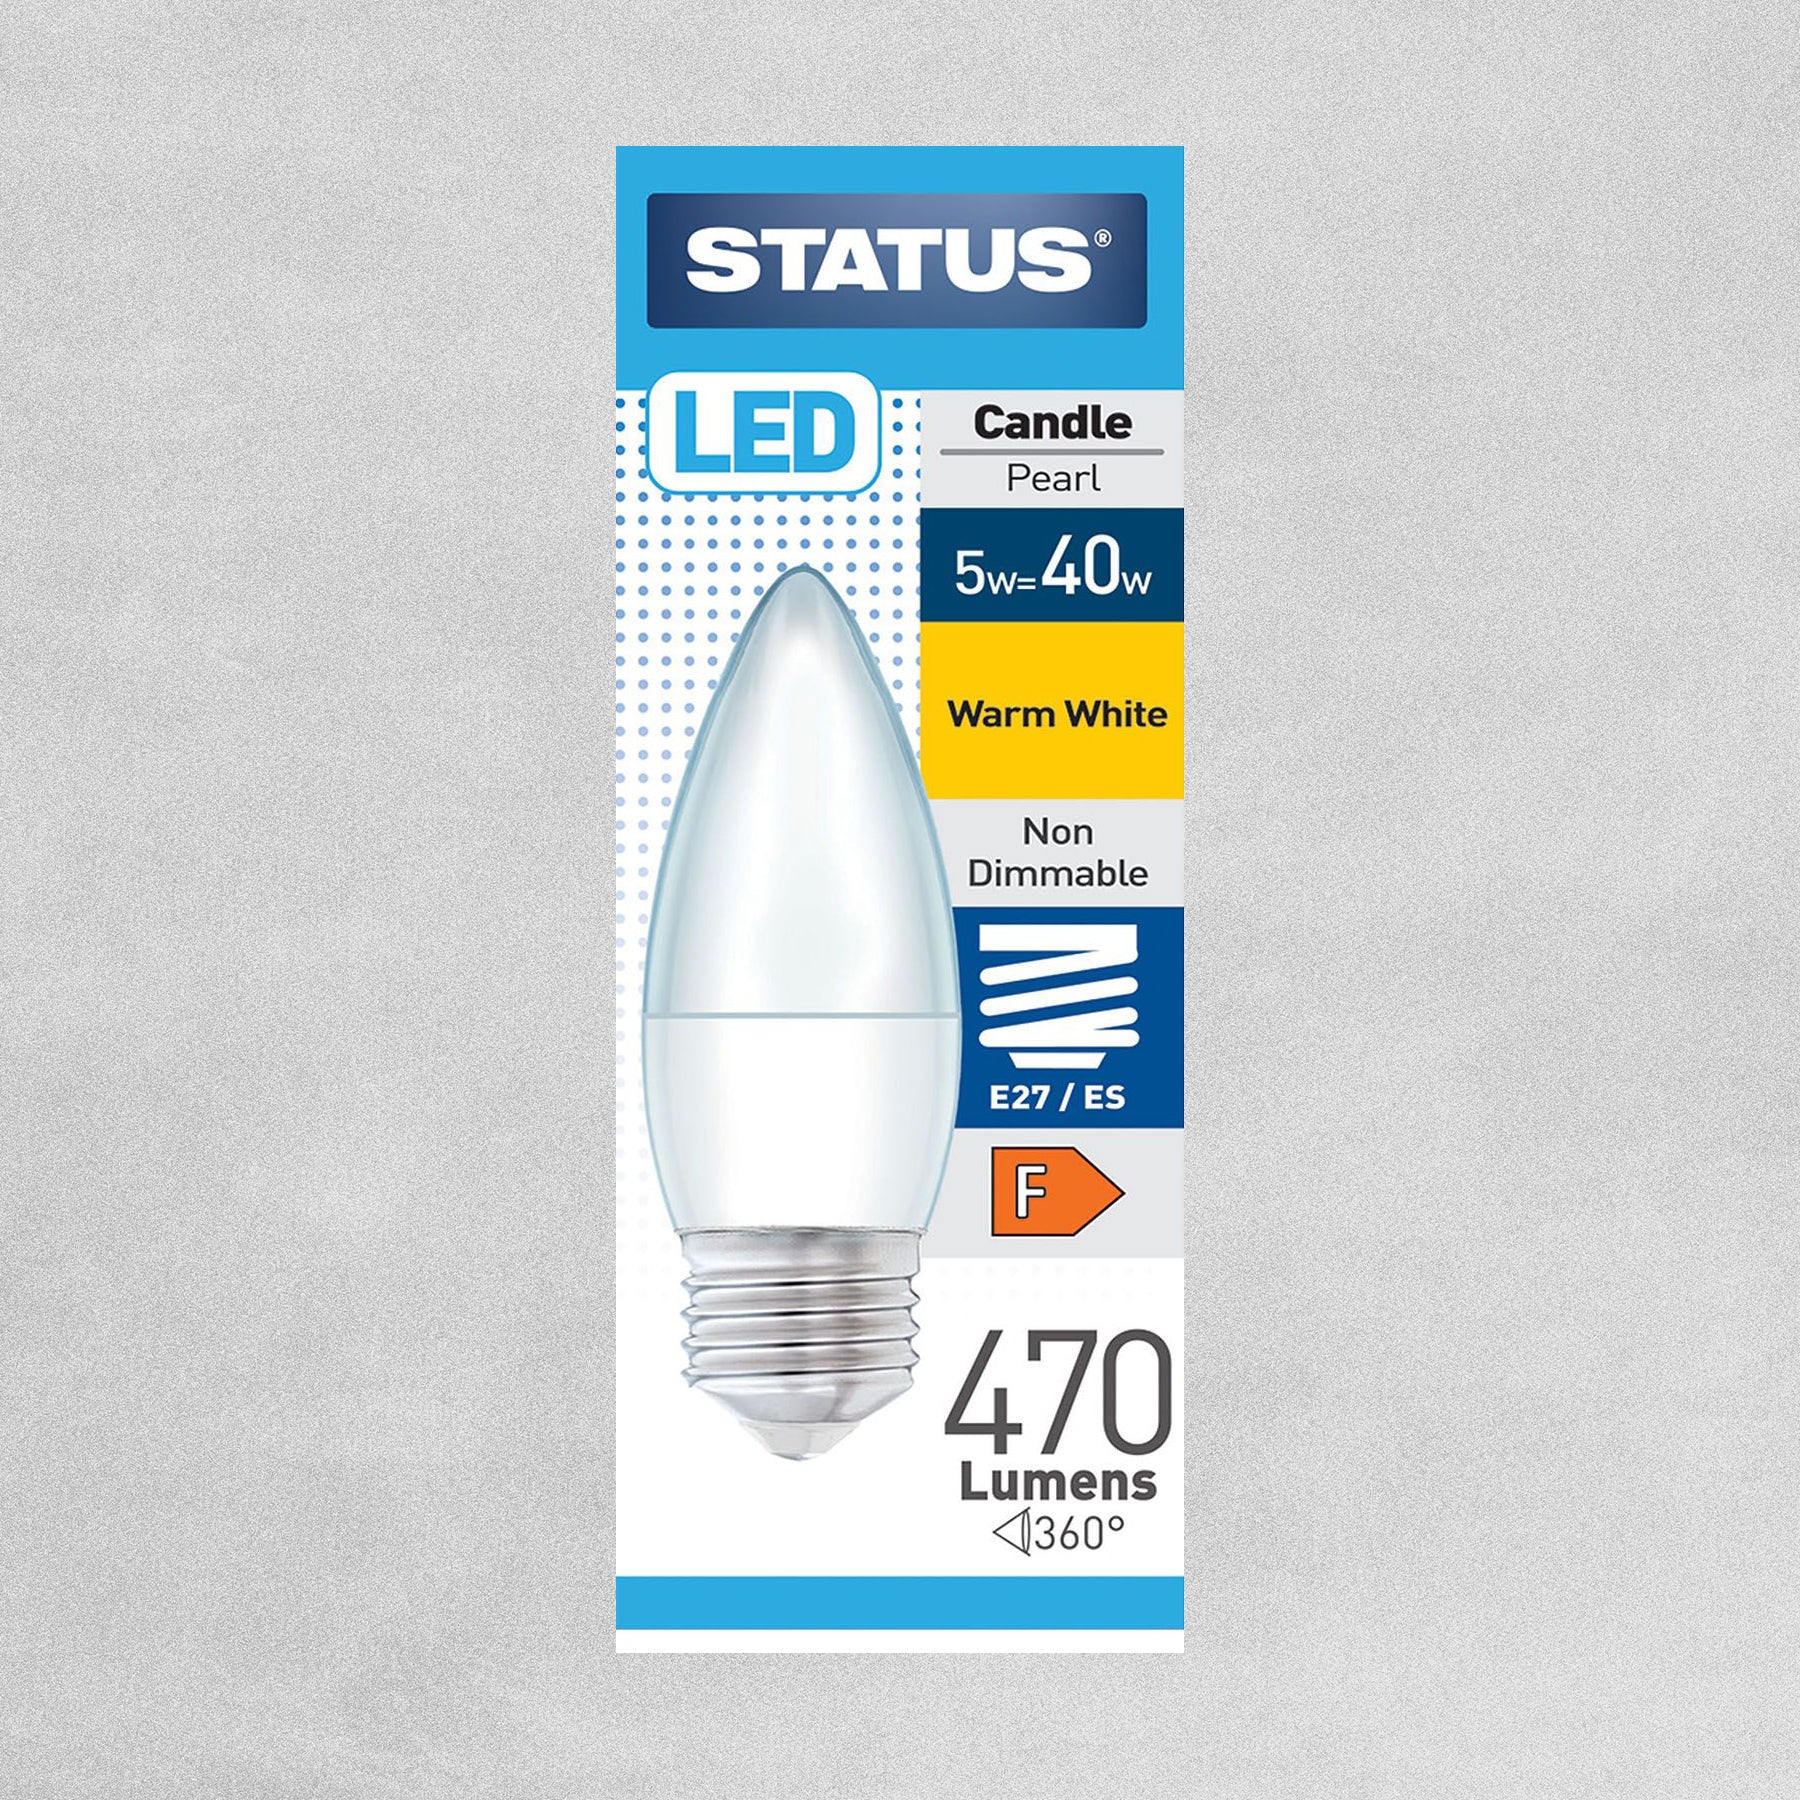 Status LED Candle Pearl Bulb E27/ES 5w=40w - Warm White